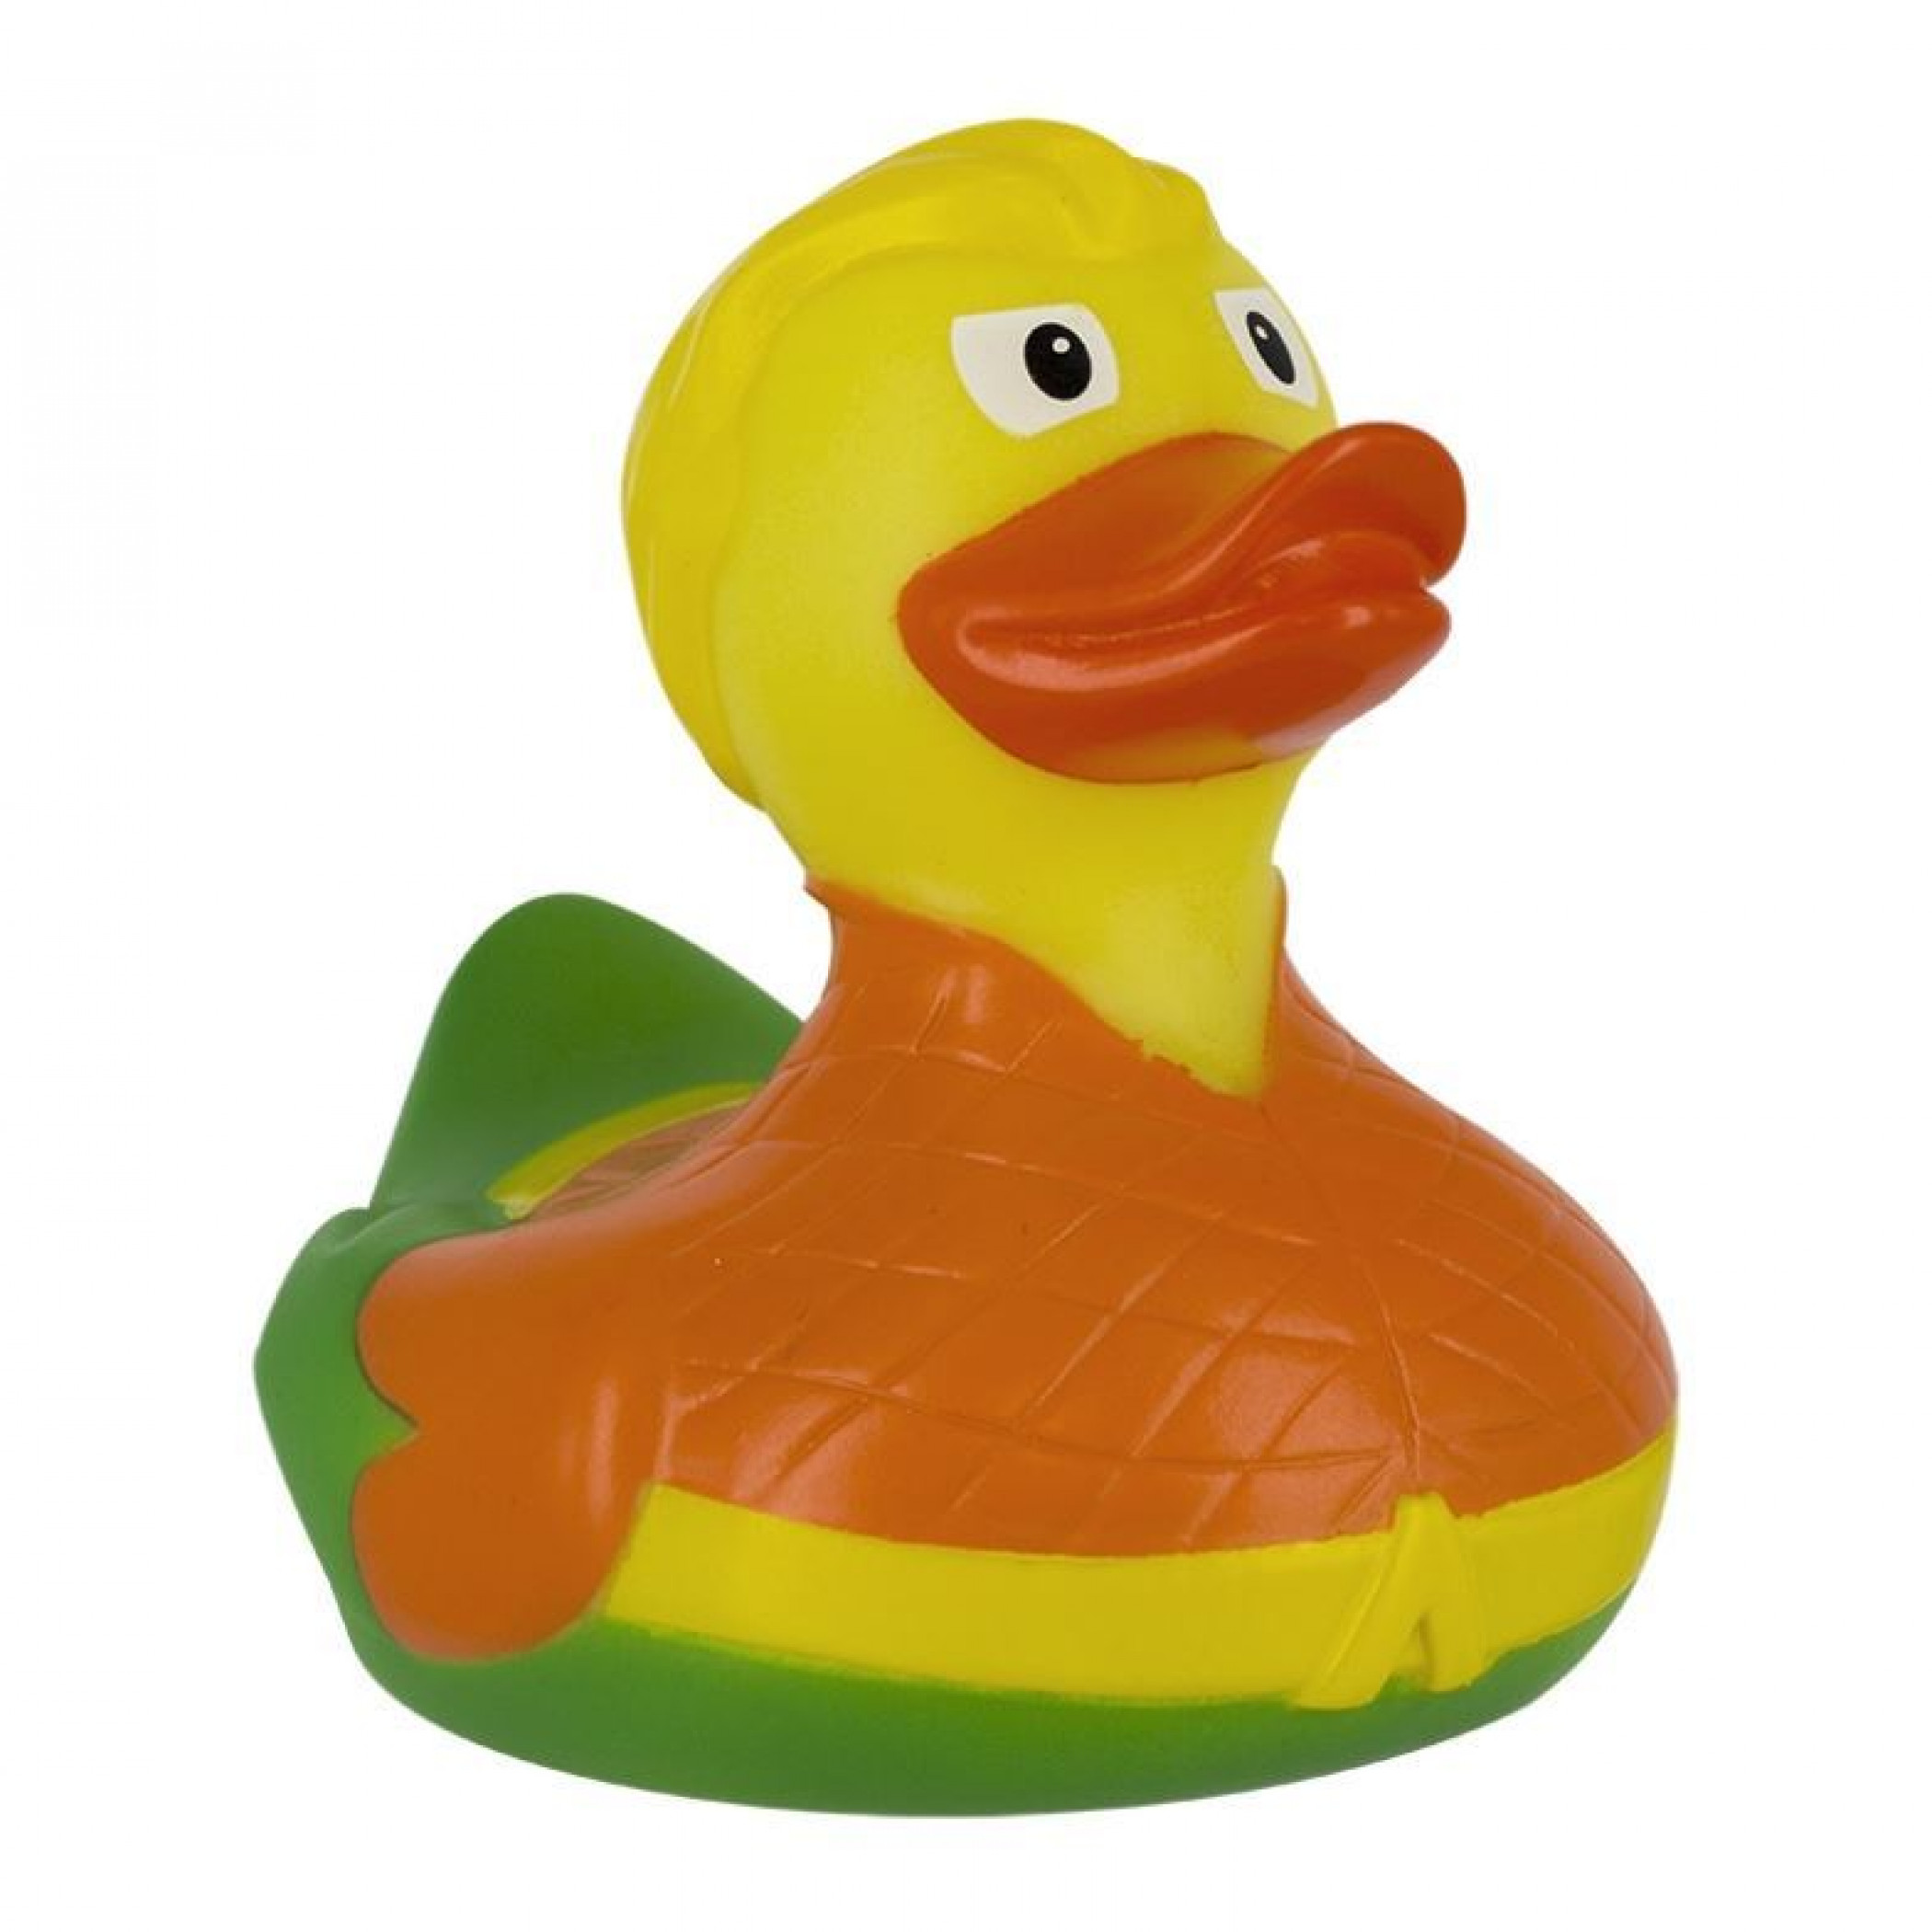 Aquaman Rubber Ducky Bath Duck